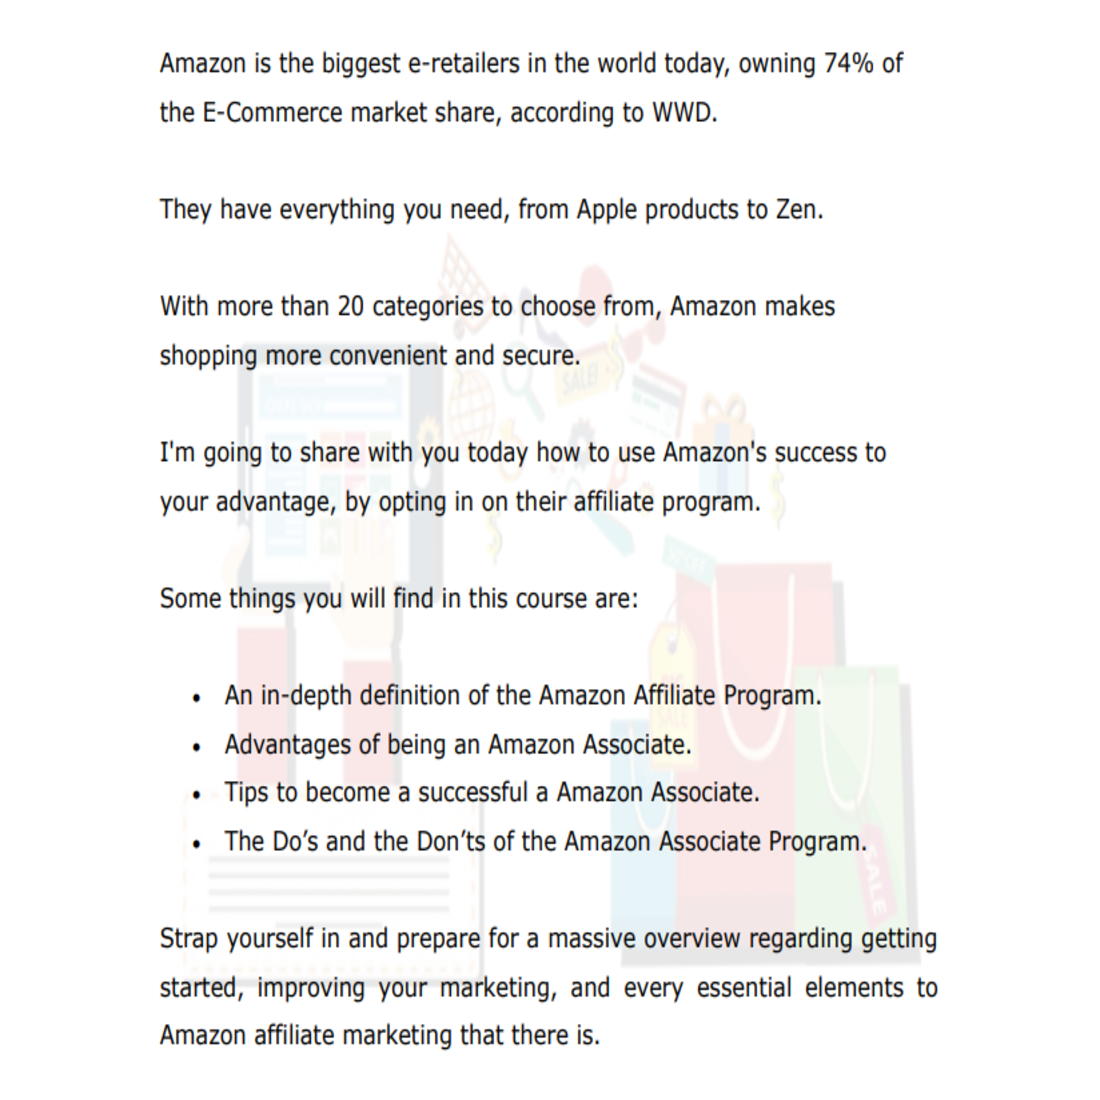 Amazon Affiliate Essentials Marketing Ebook Course Profitable Side Hustle preview image.